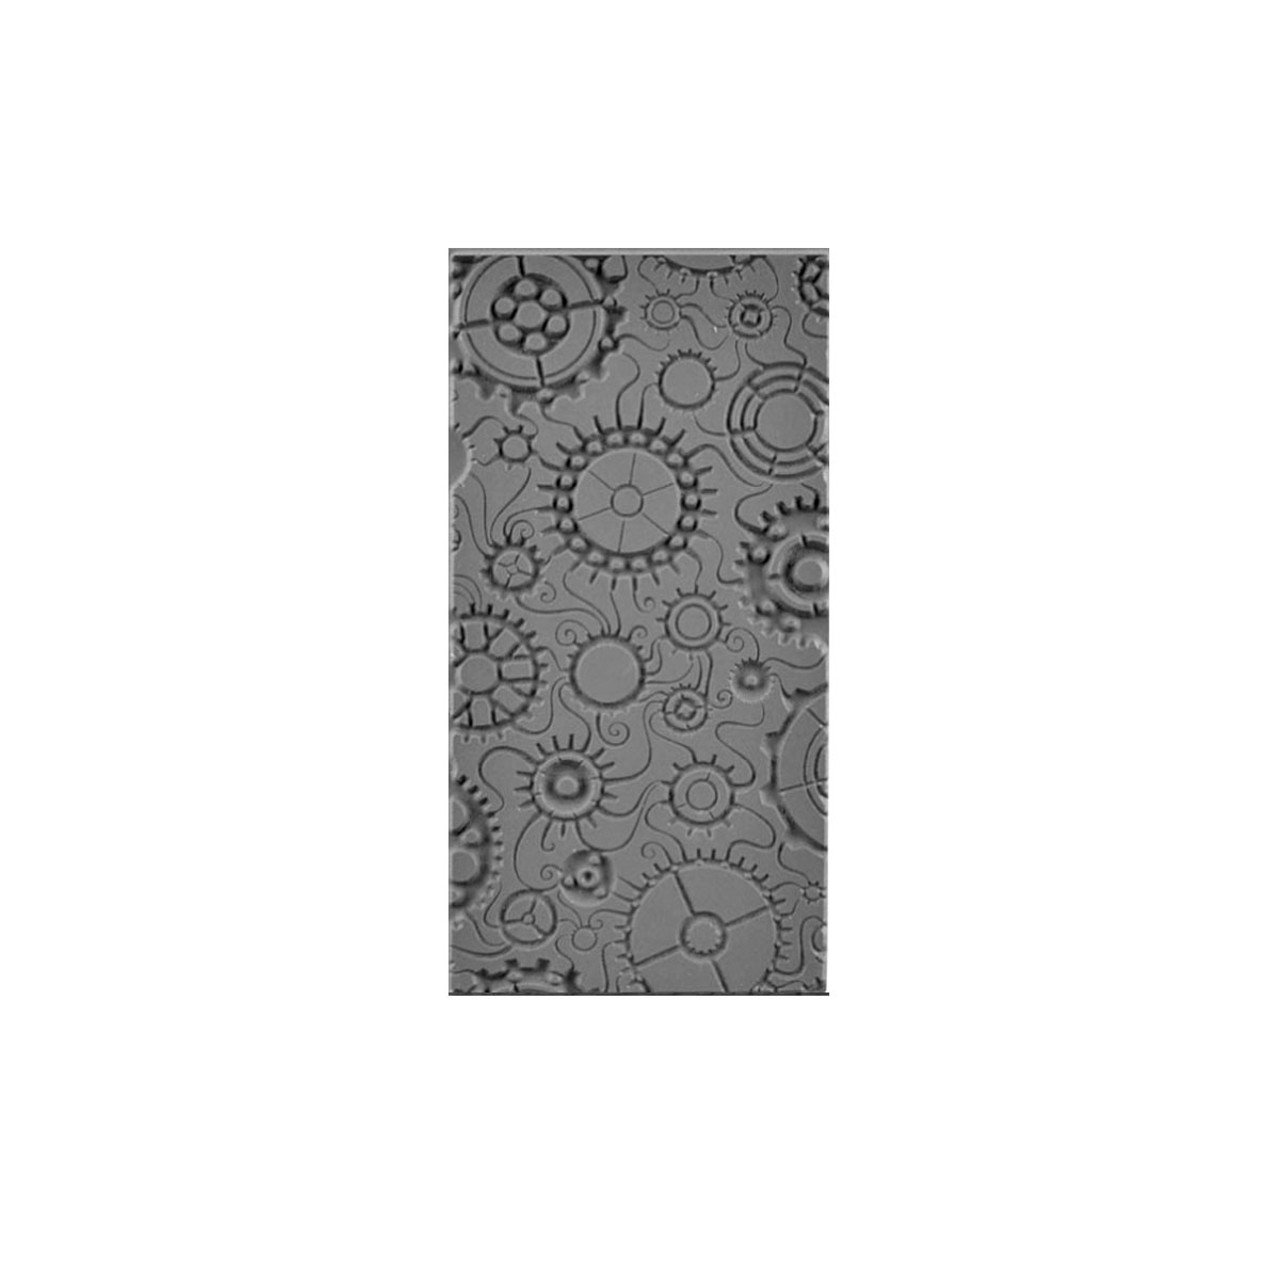 Texture Tile - Steampunk Swirl Embossed